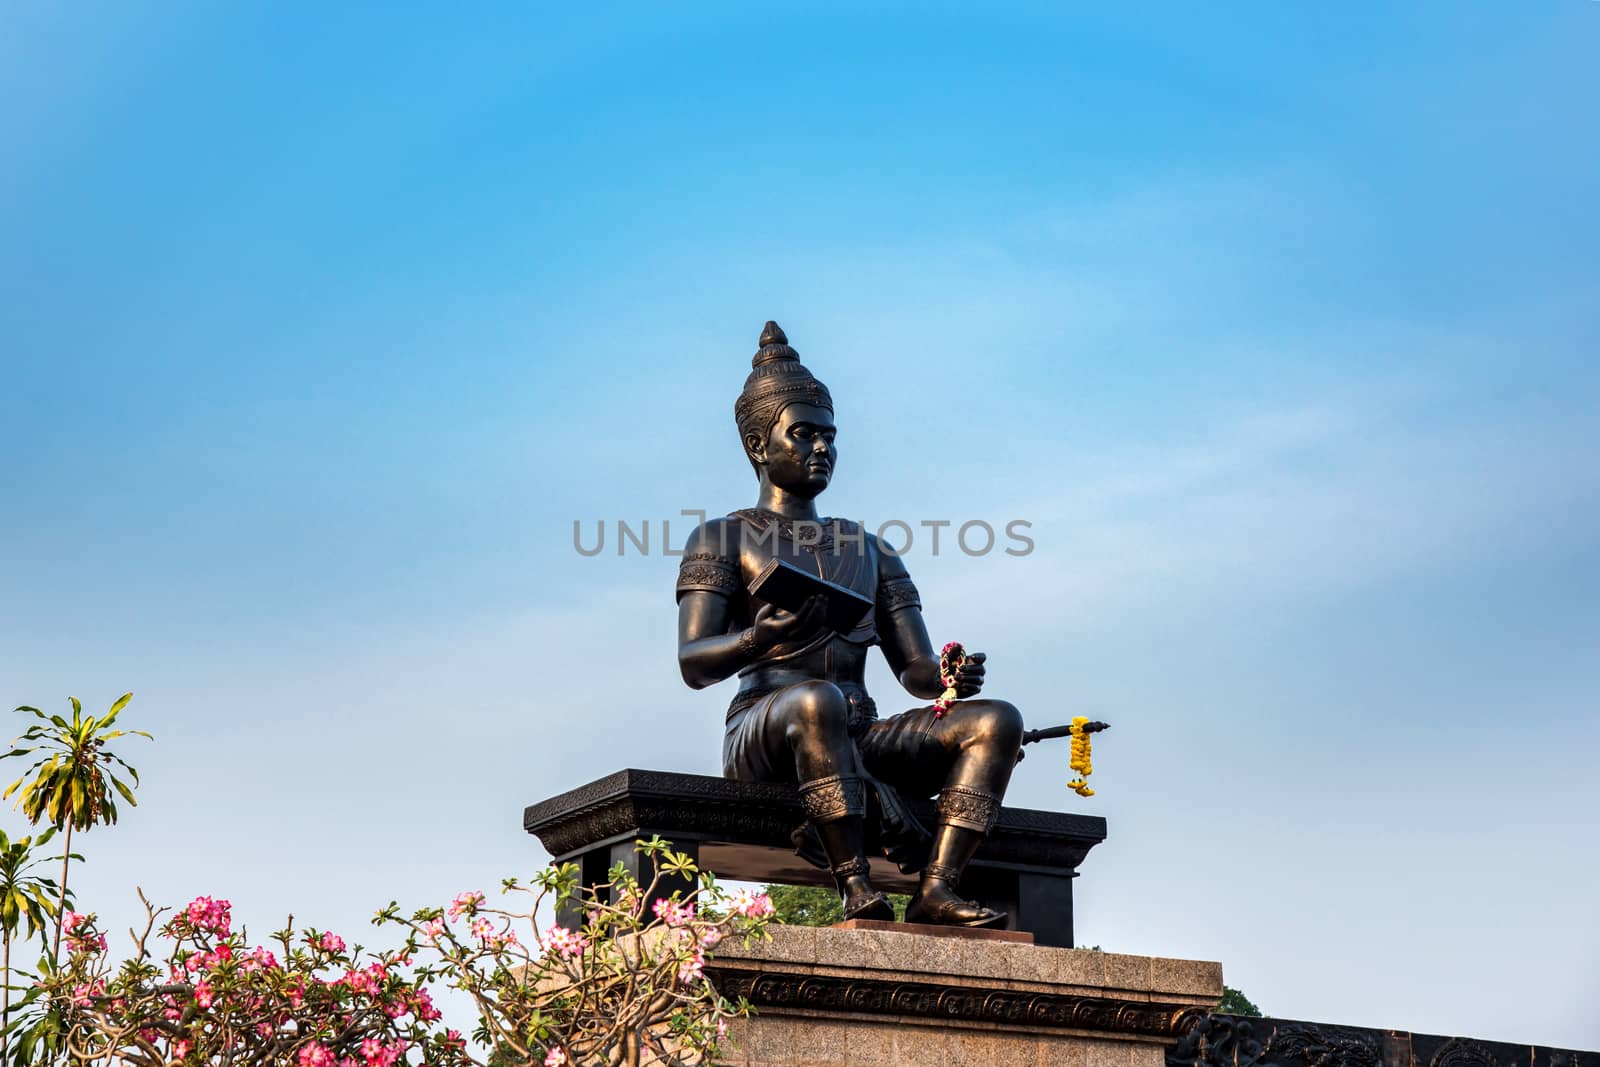 Monument of King Ramkhamhaeng the Great in Sukhothai historical park, Thailand.